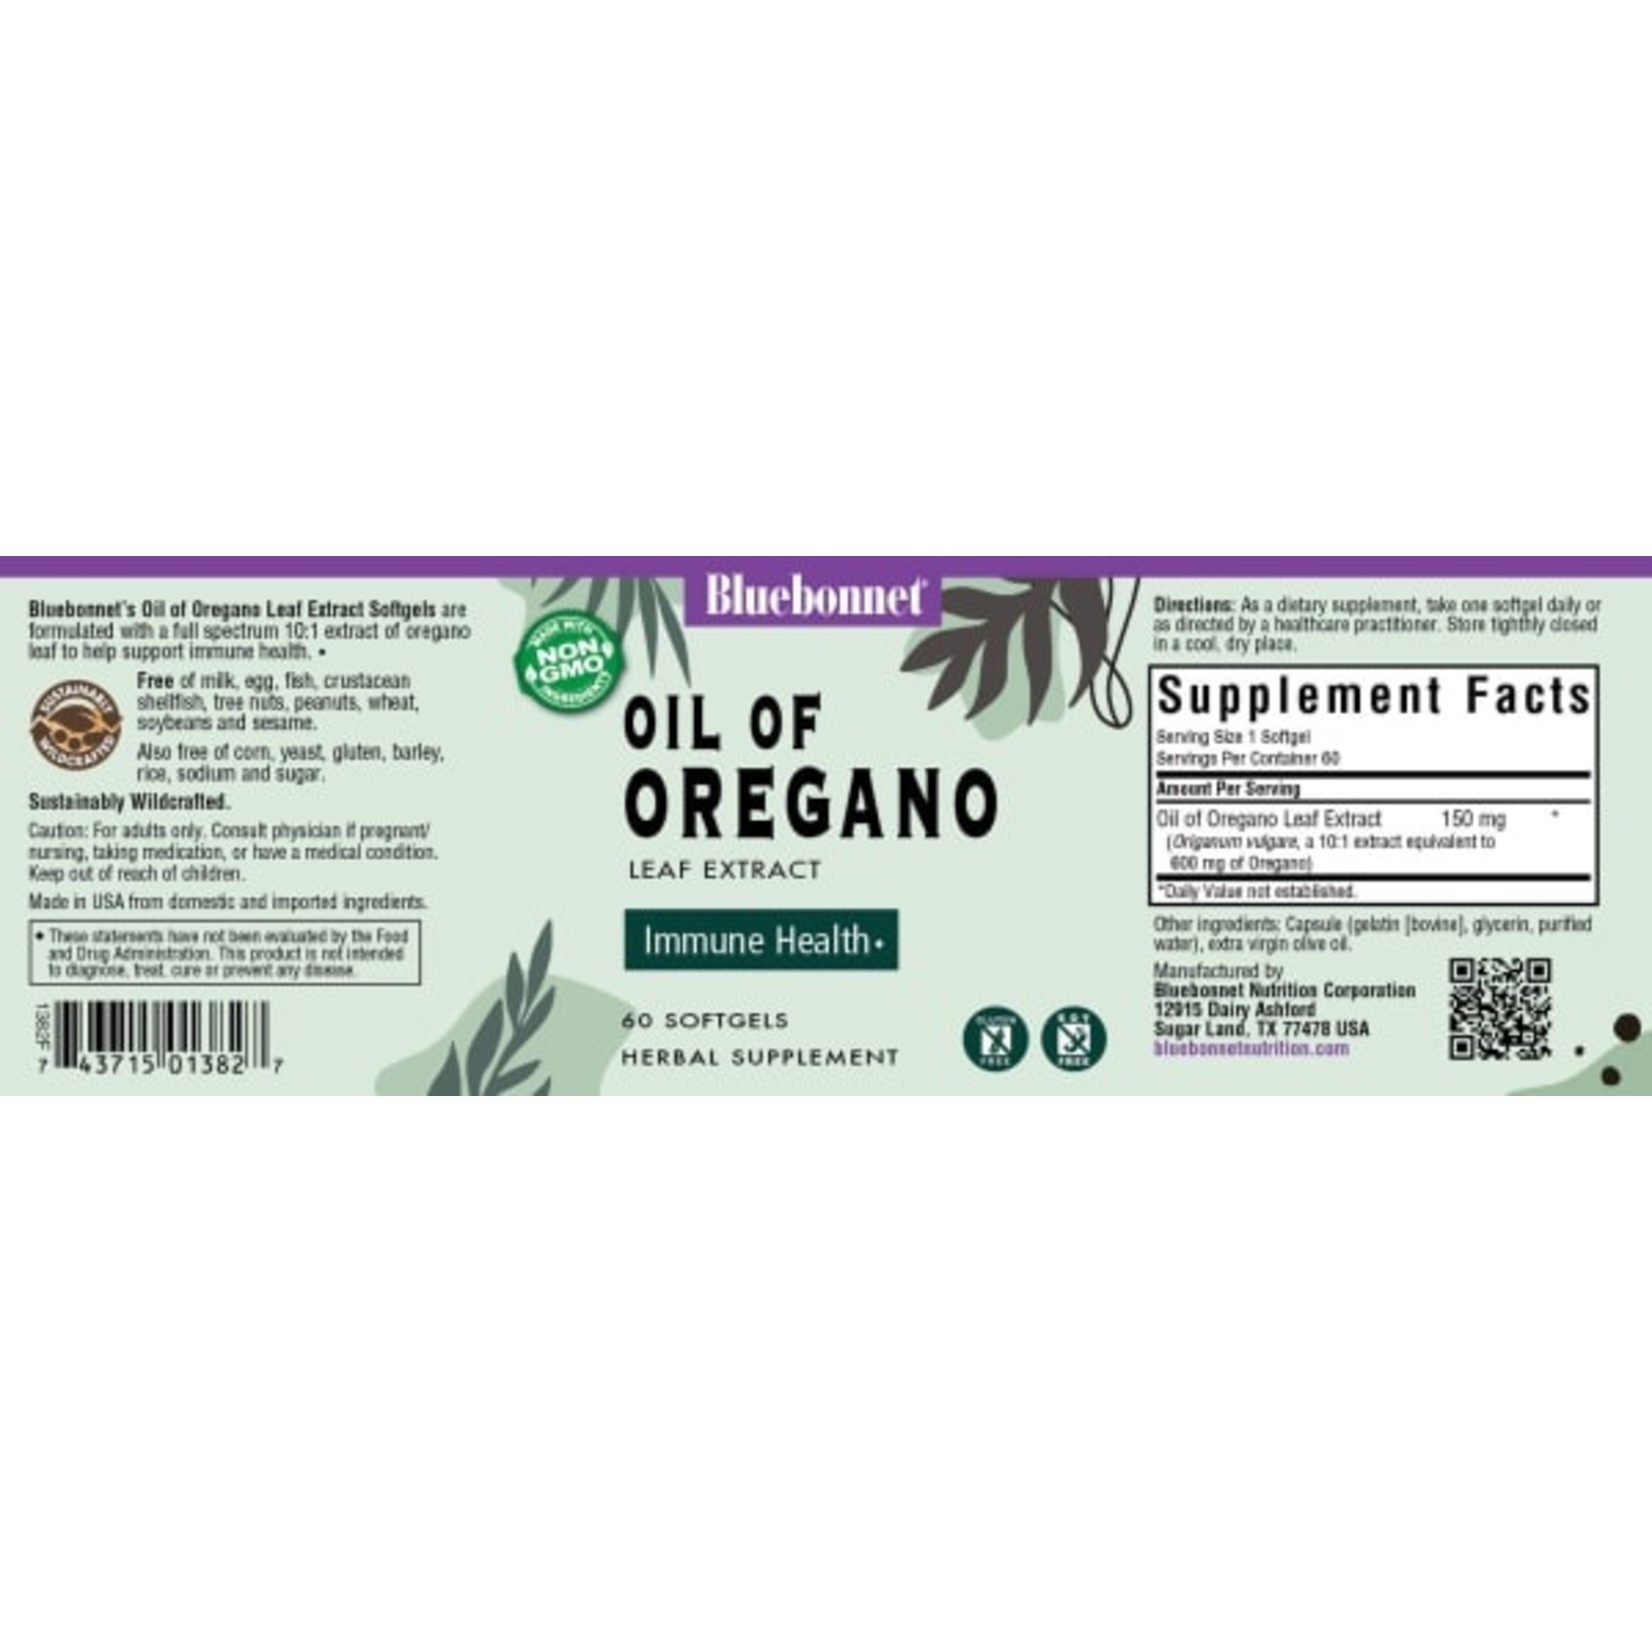 Bluebonnet Bluebonnet - Oil Of Oregano Leaf Extract - 60 Softgels